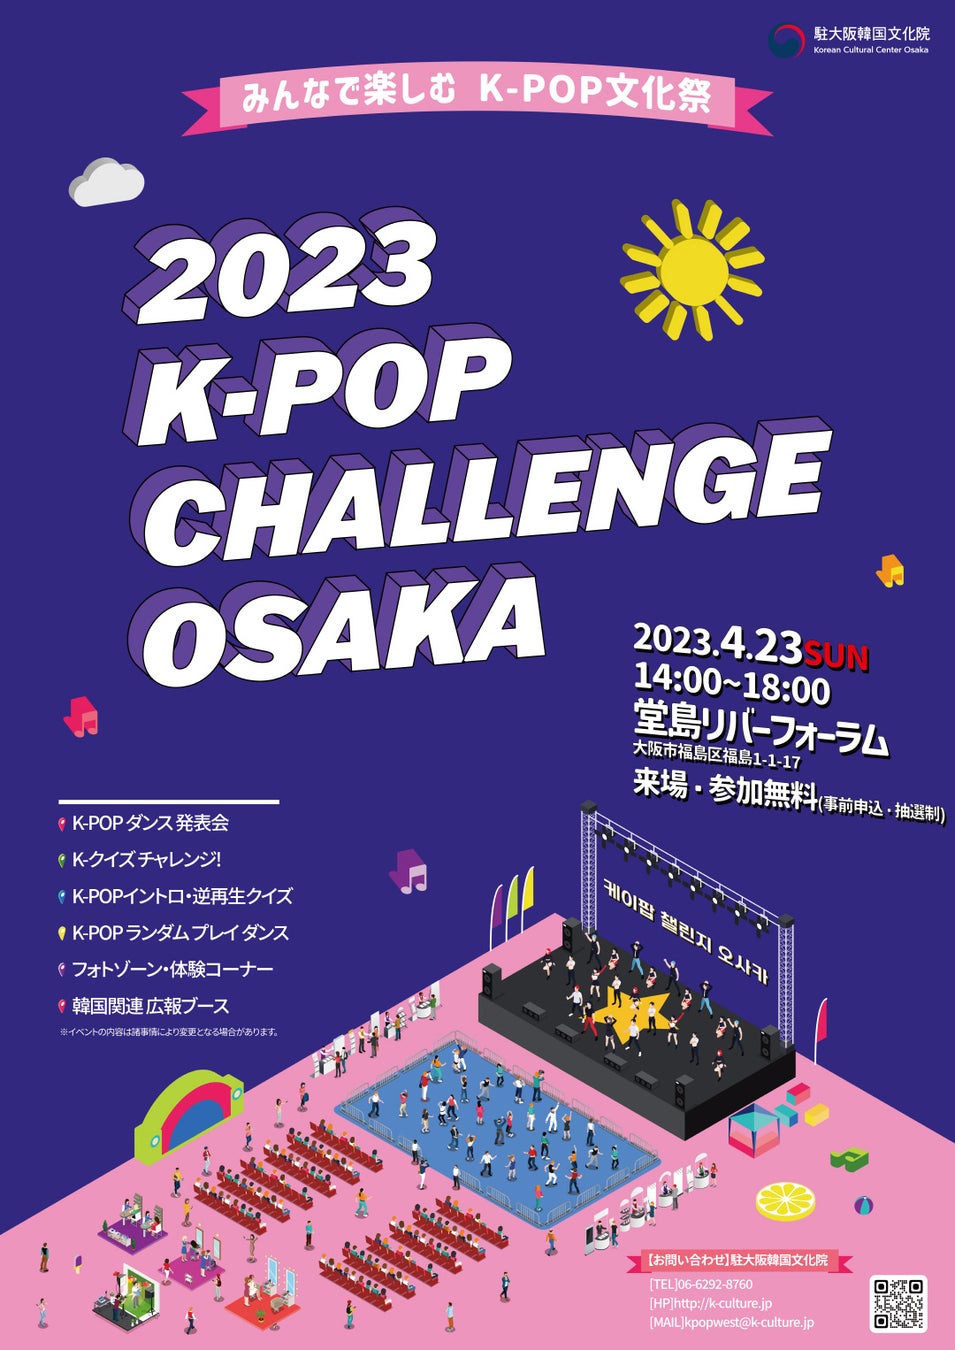 K-POPファンが一日中楽しめる参加形イベント「2023 K-POP CHALLENGE OSAKA」開催